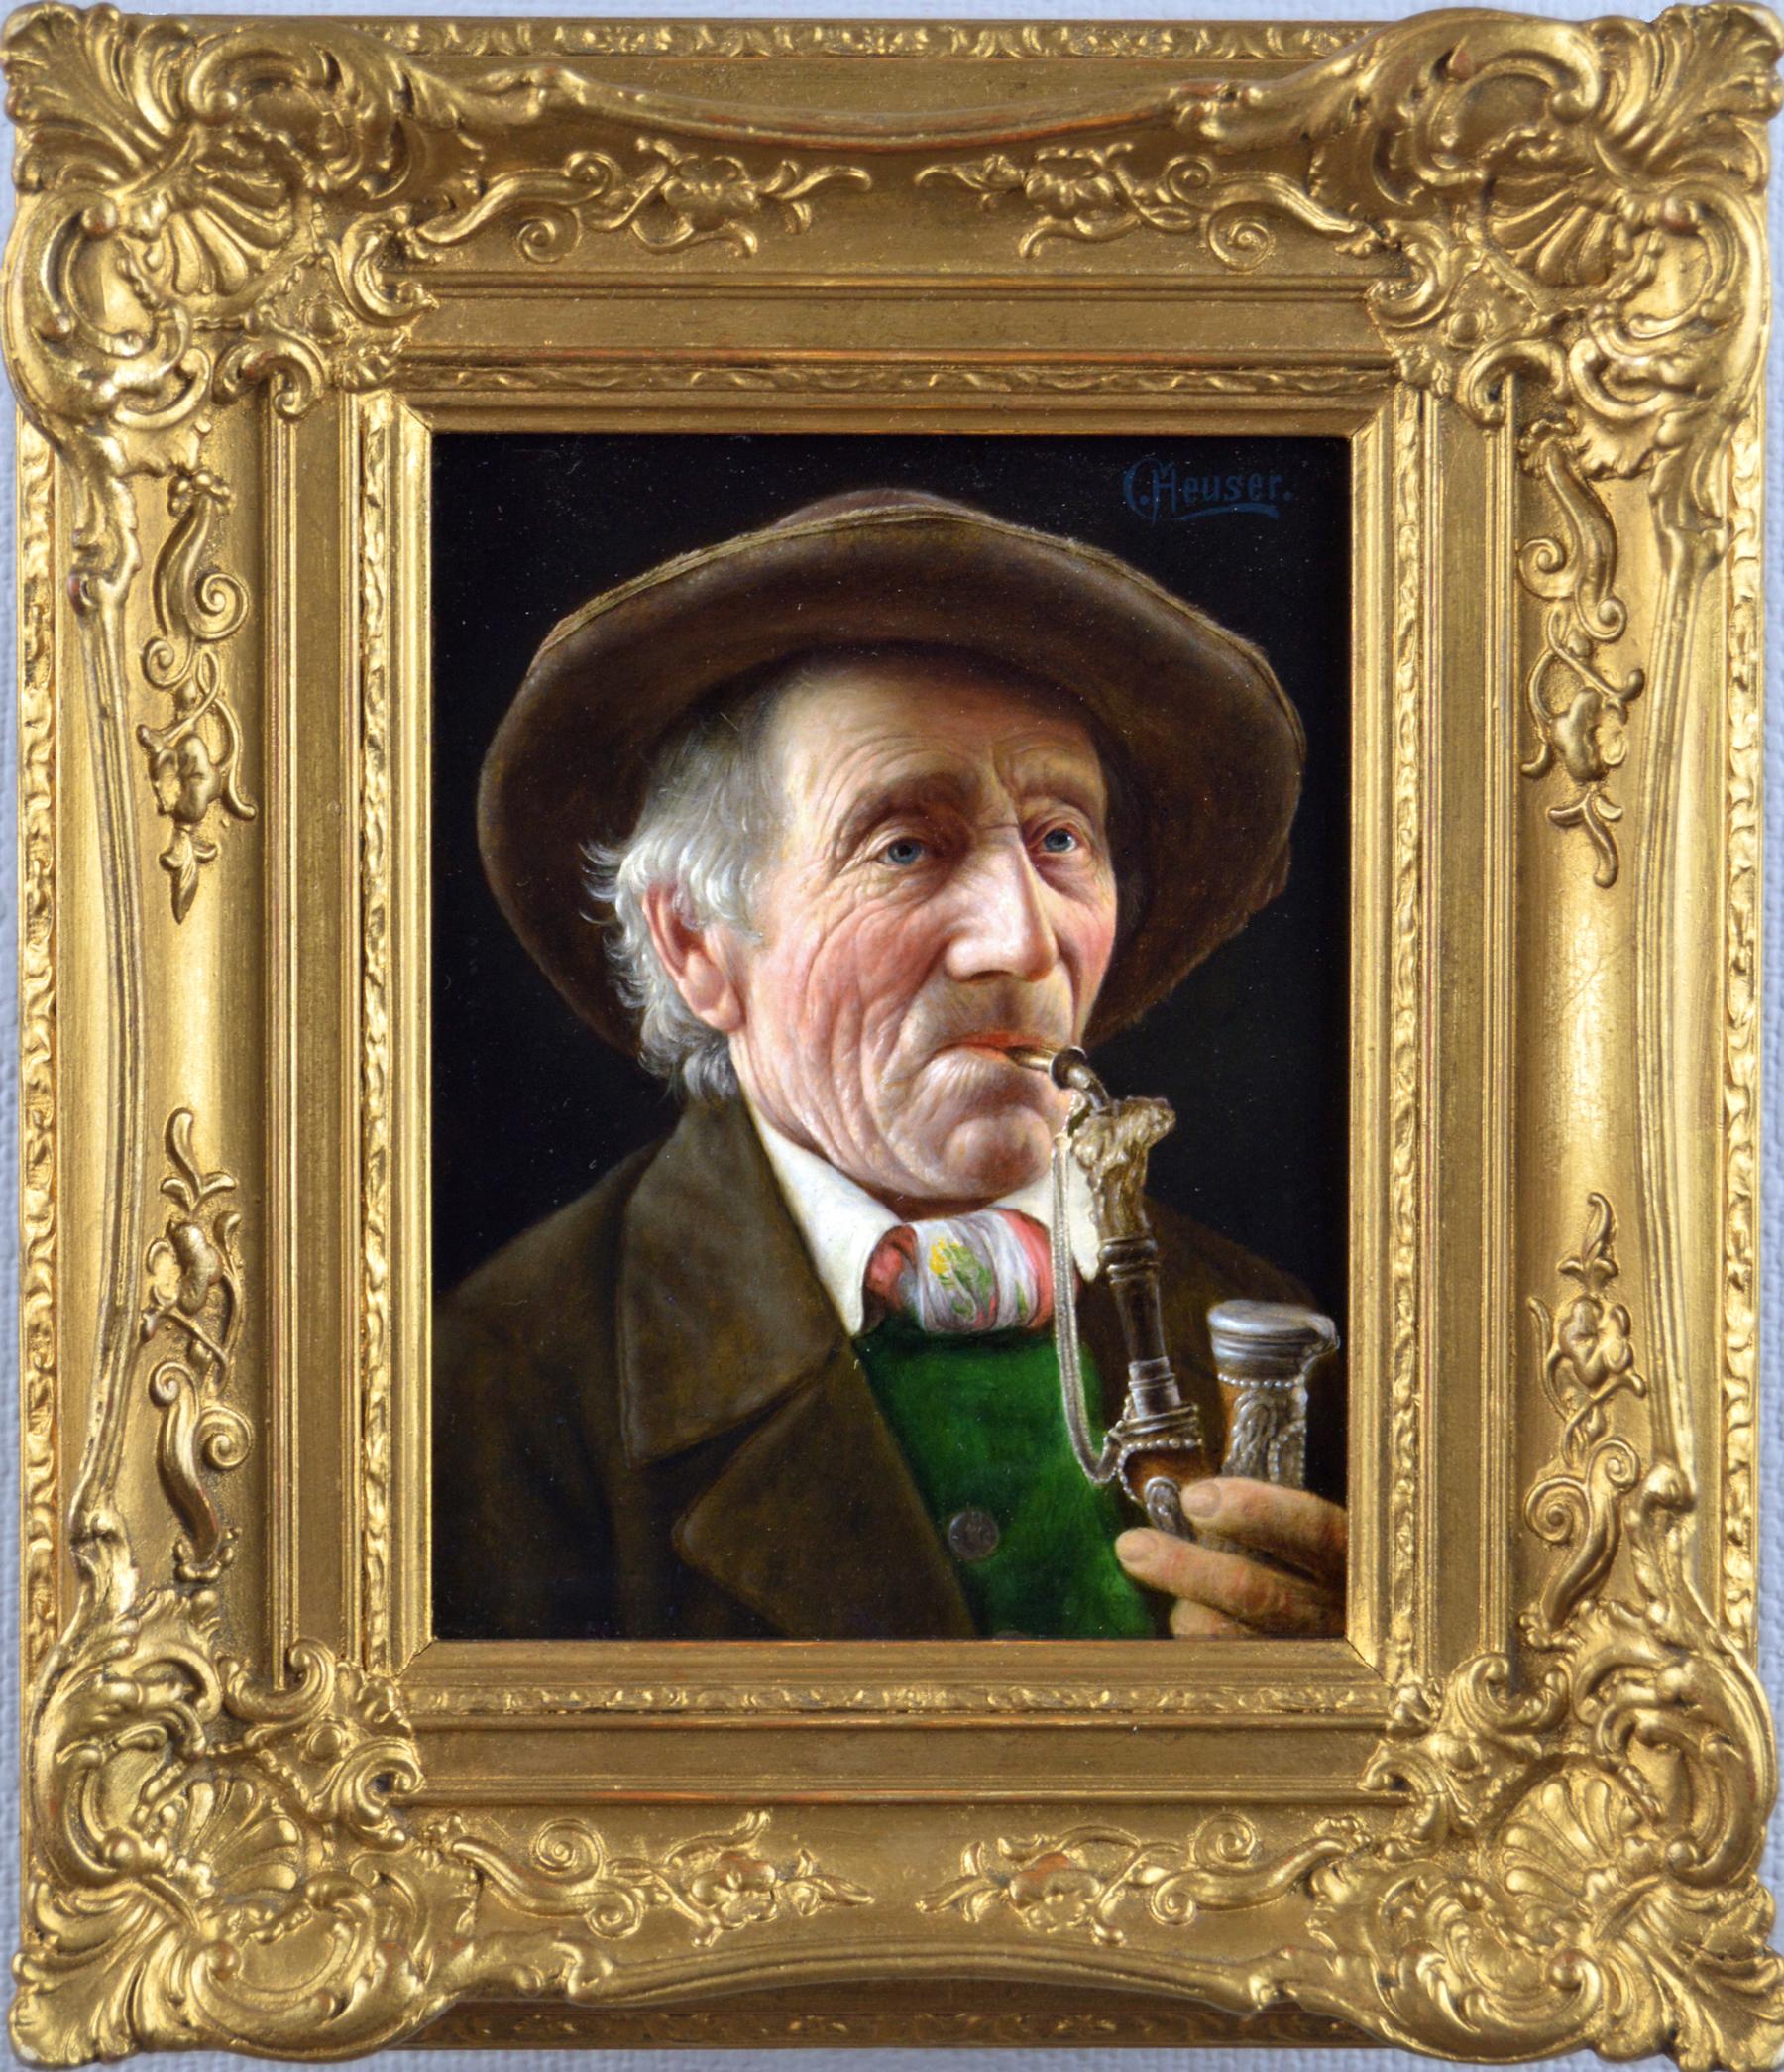 Carl Heuser Portrait Painting - 19th Century oil painting portrait of a Tyrolean gentlemen